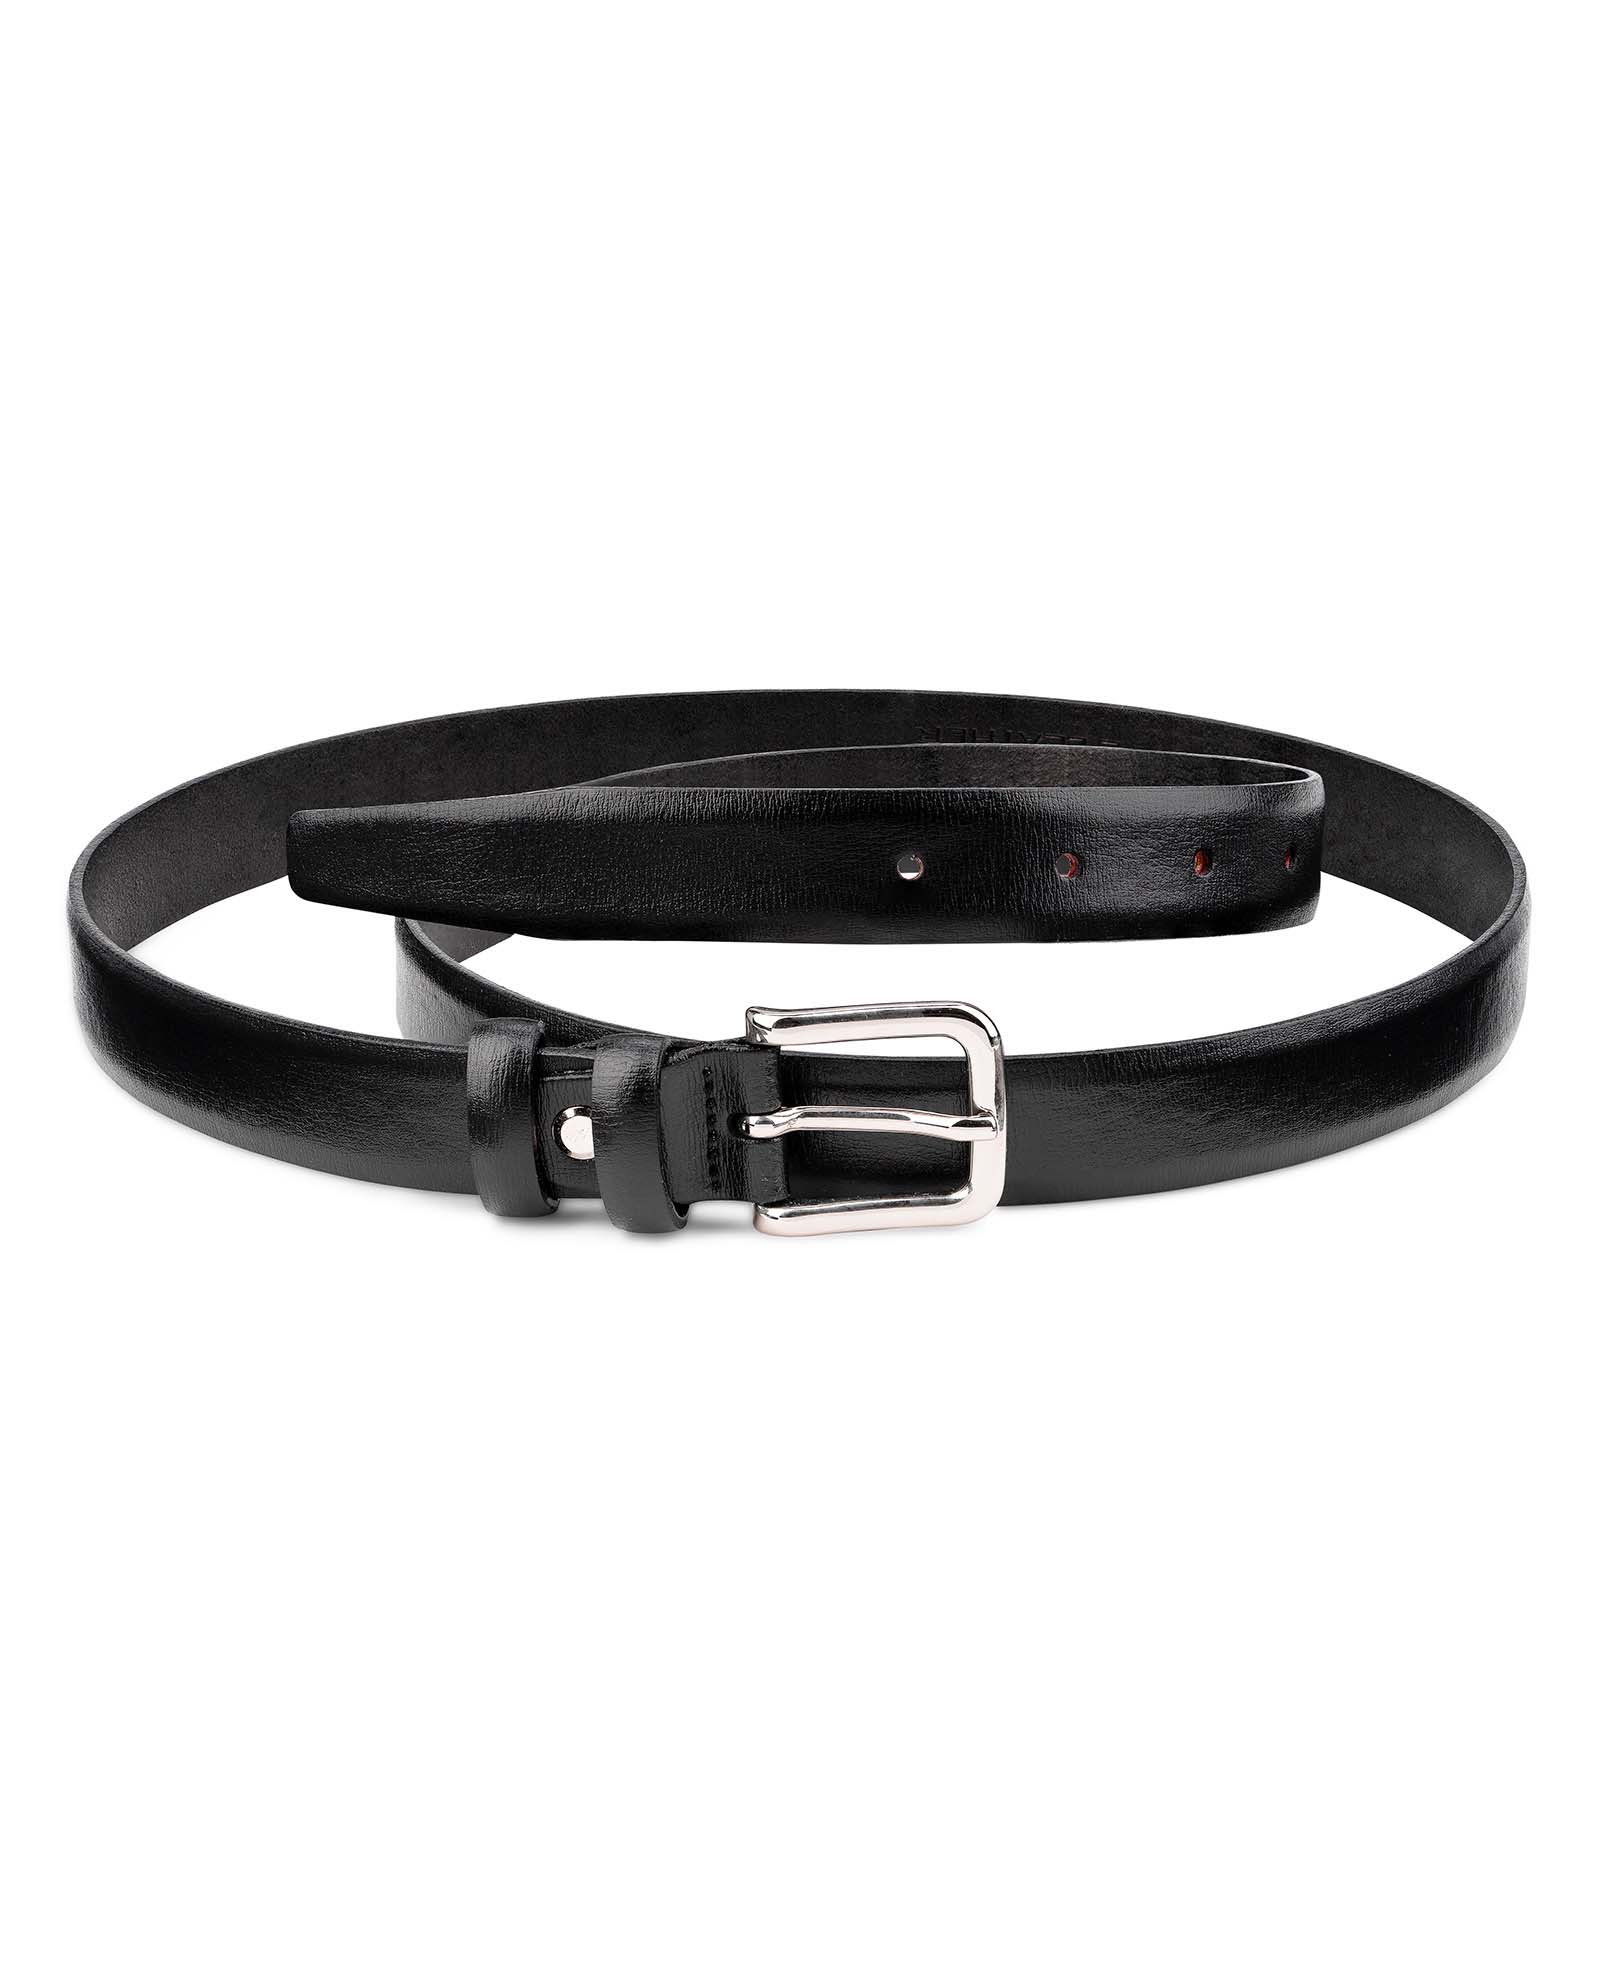 Women's Thin Leather Belt Smooth Black 1 inch Wide 28 / 70 cm - Black | Capo Pelle